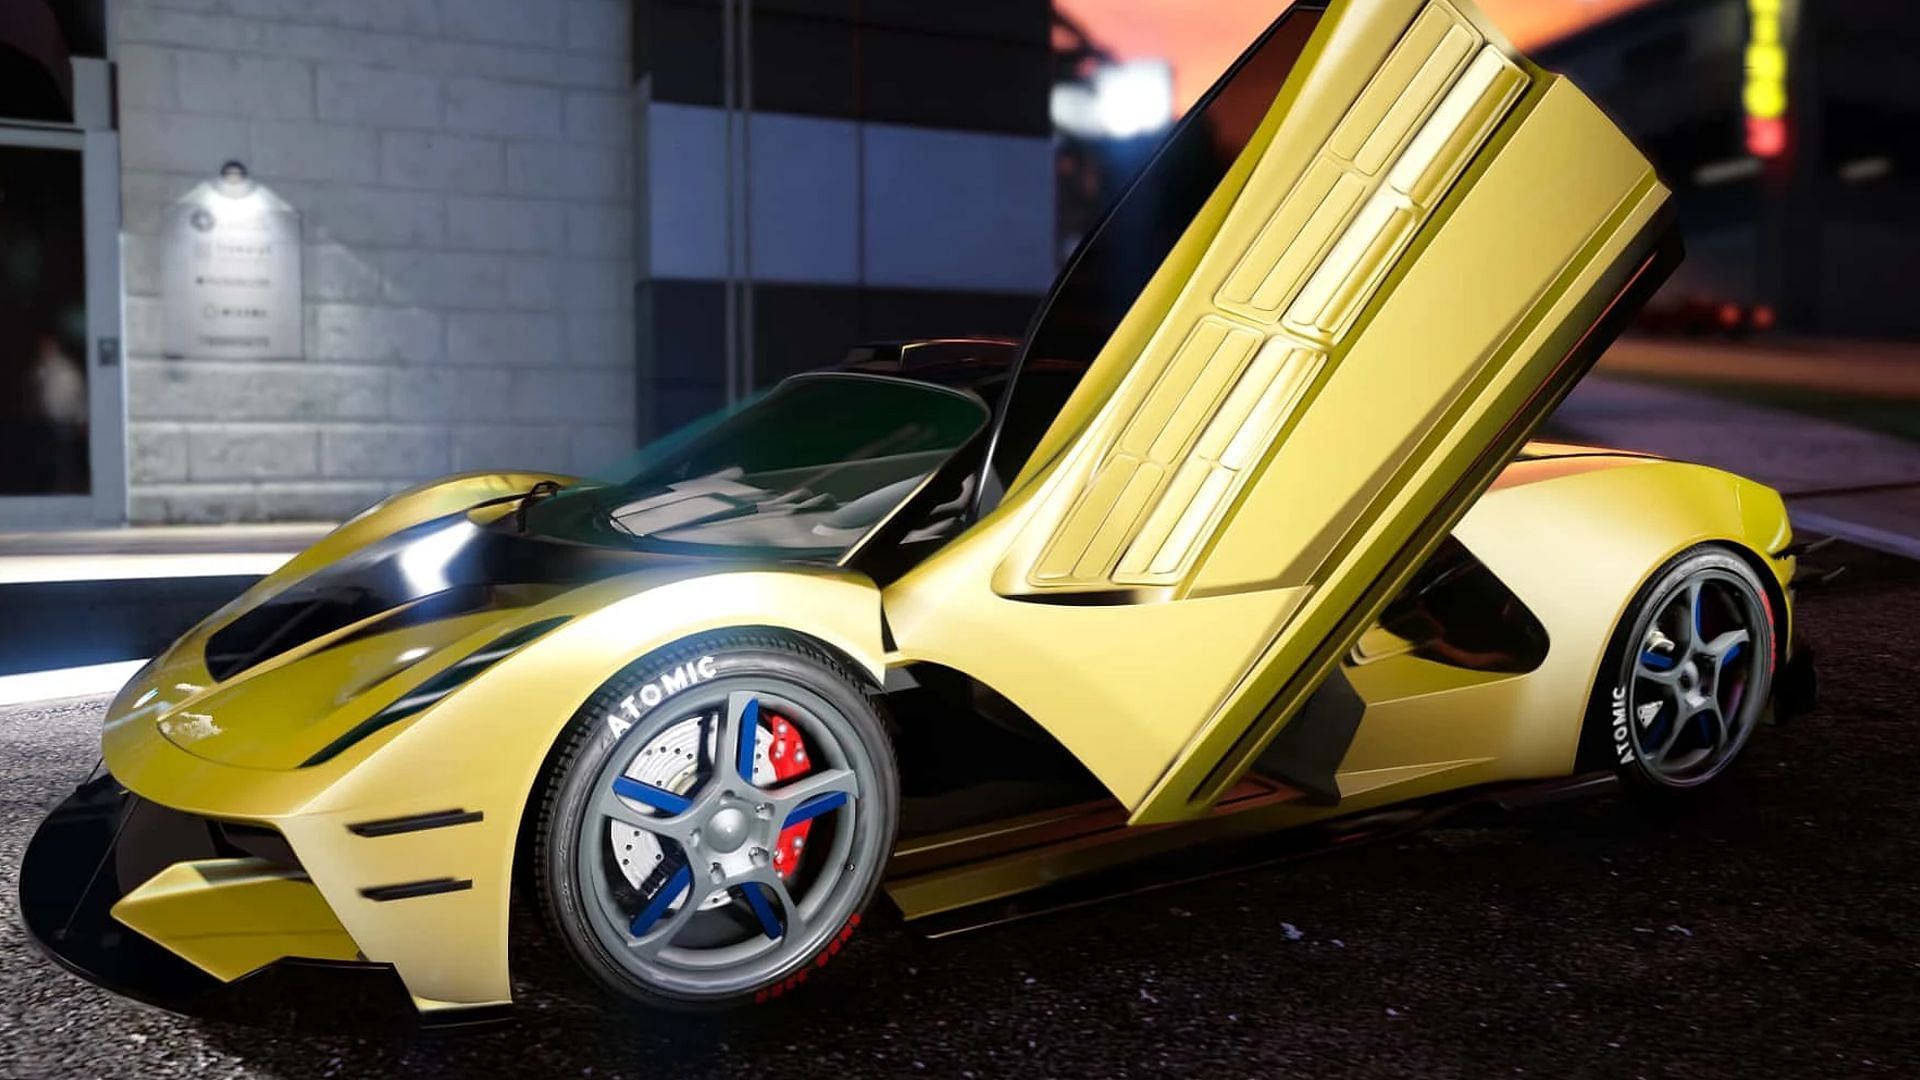 A screenshot of the car in question (Image via Rockstar Games)